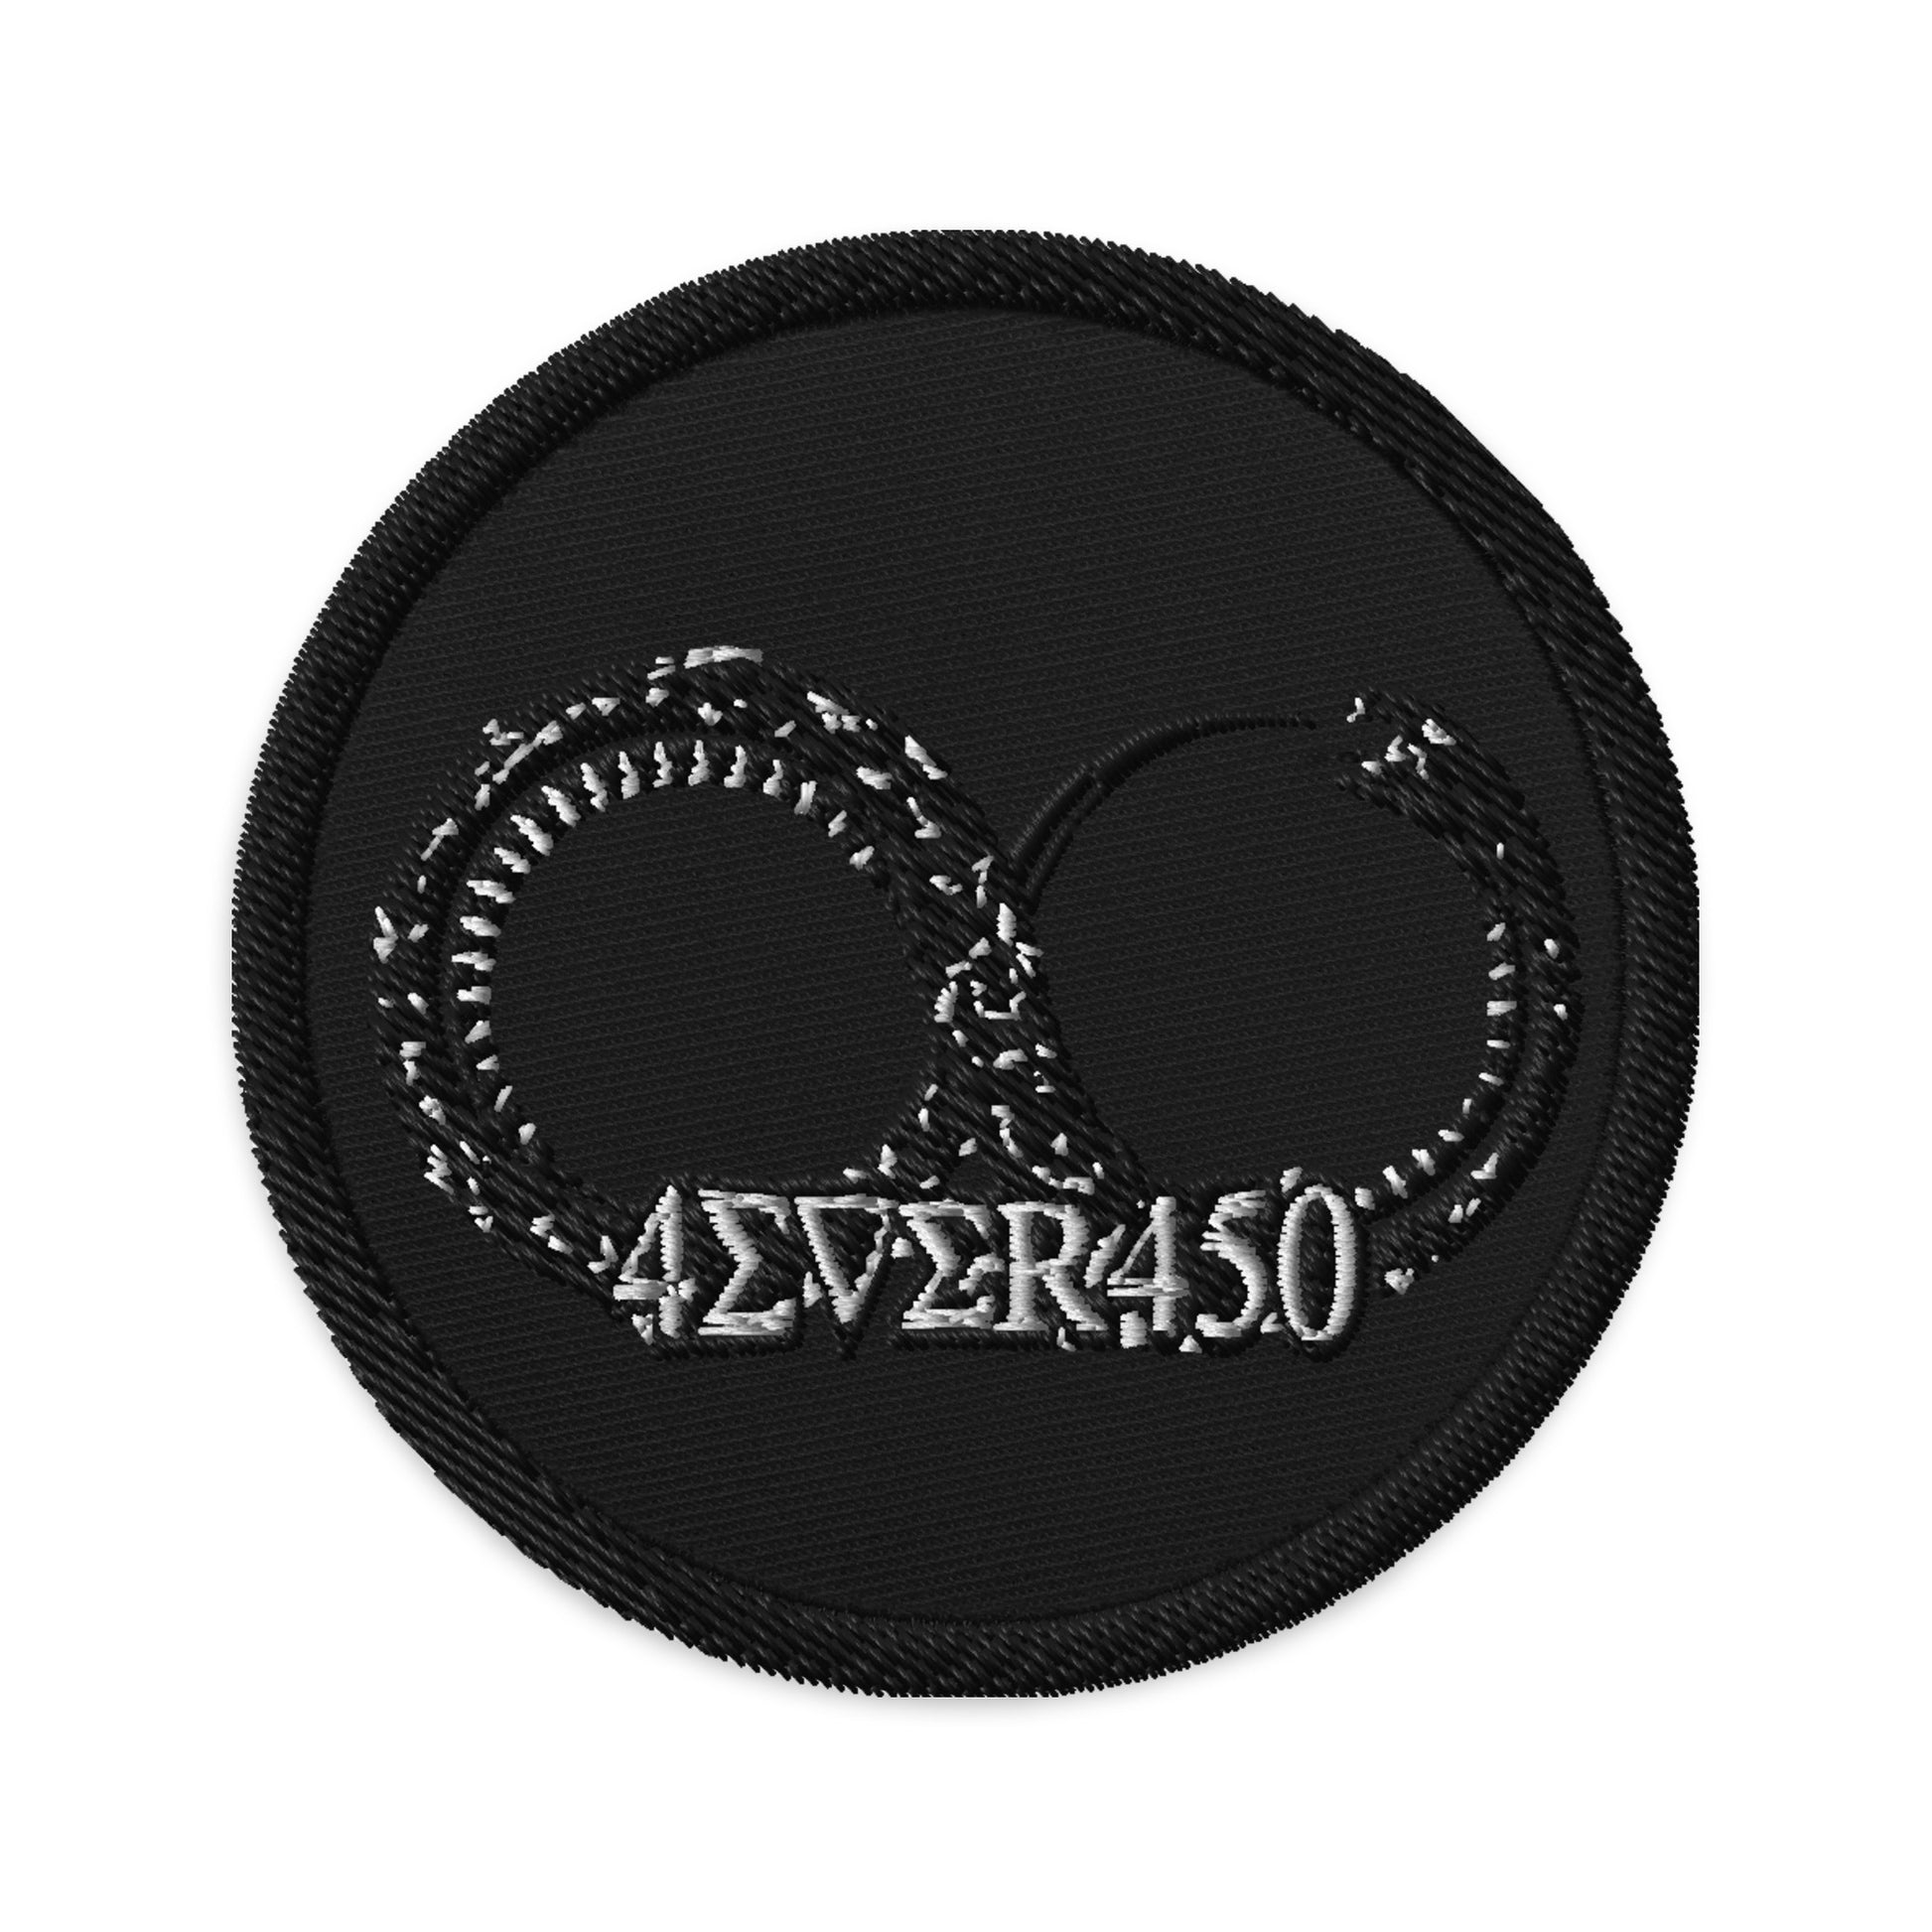 4Ever450 patch - Iamdubeu